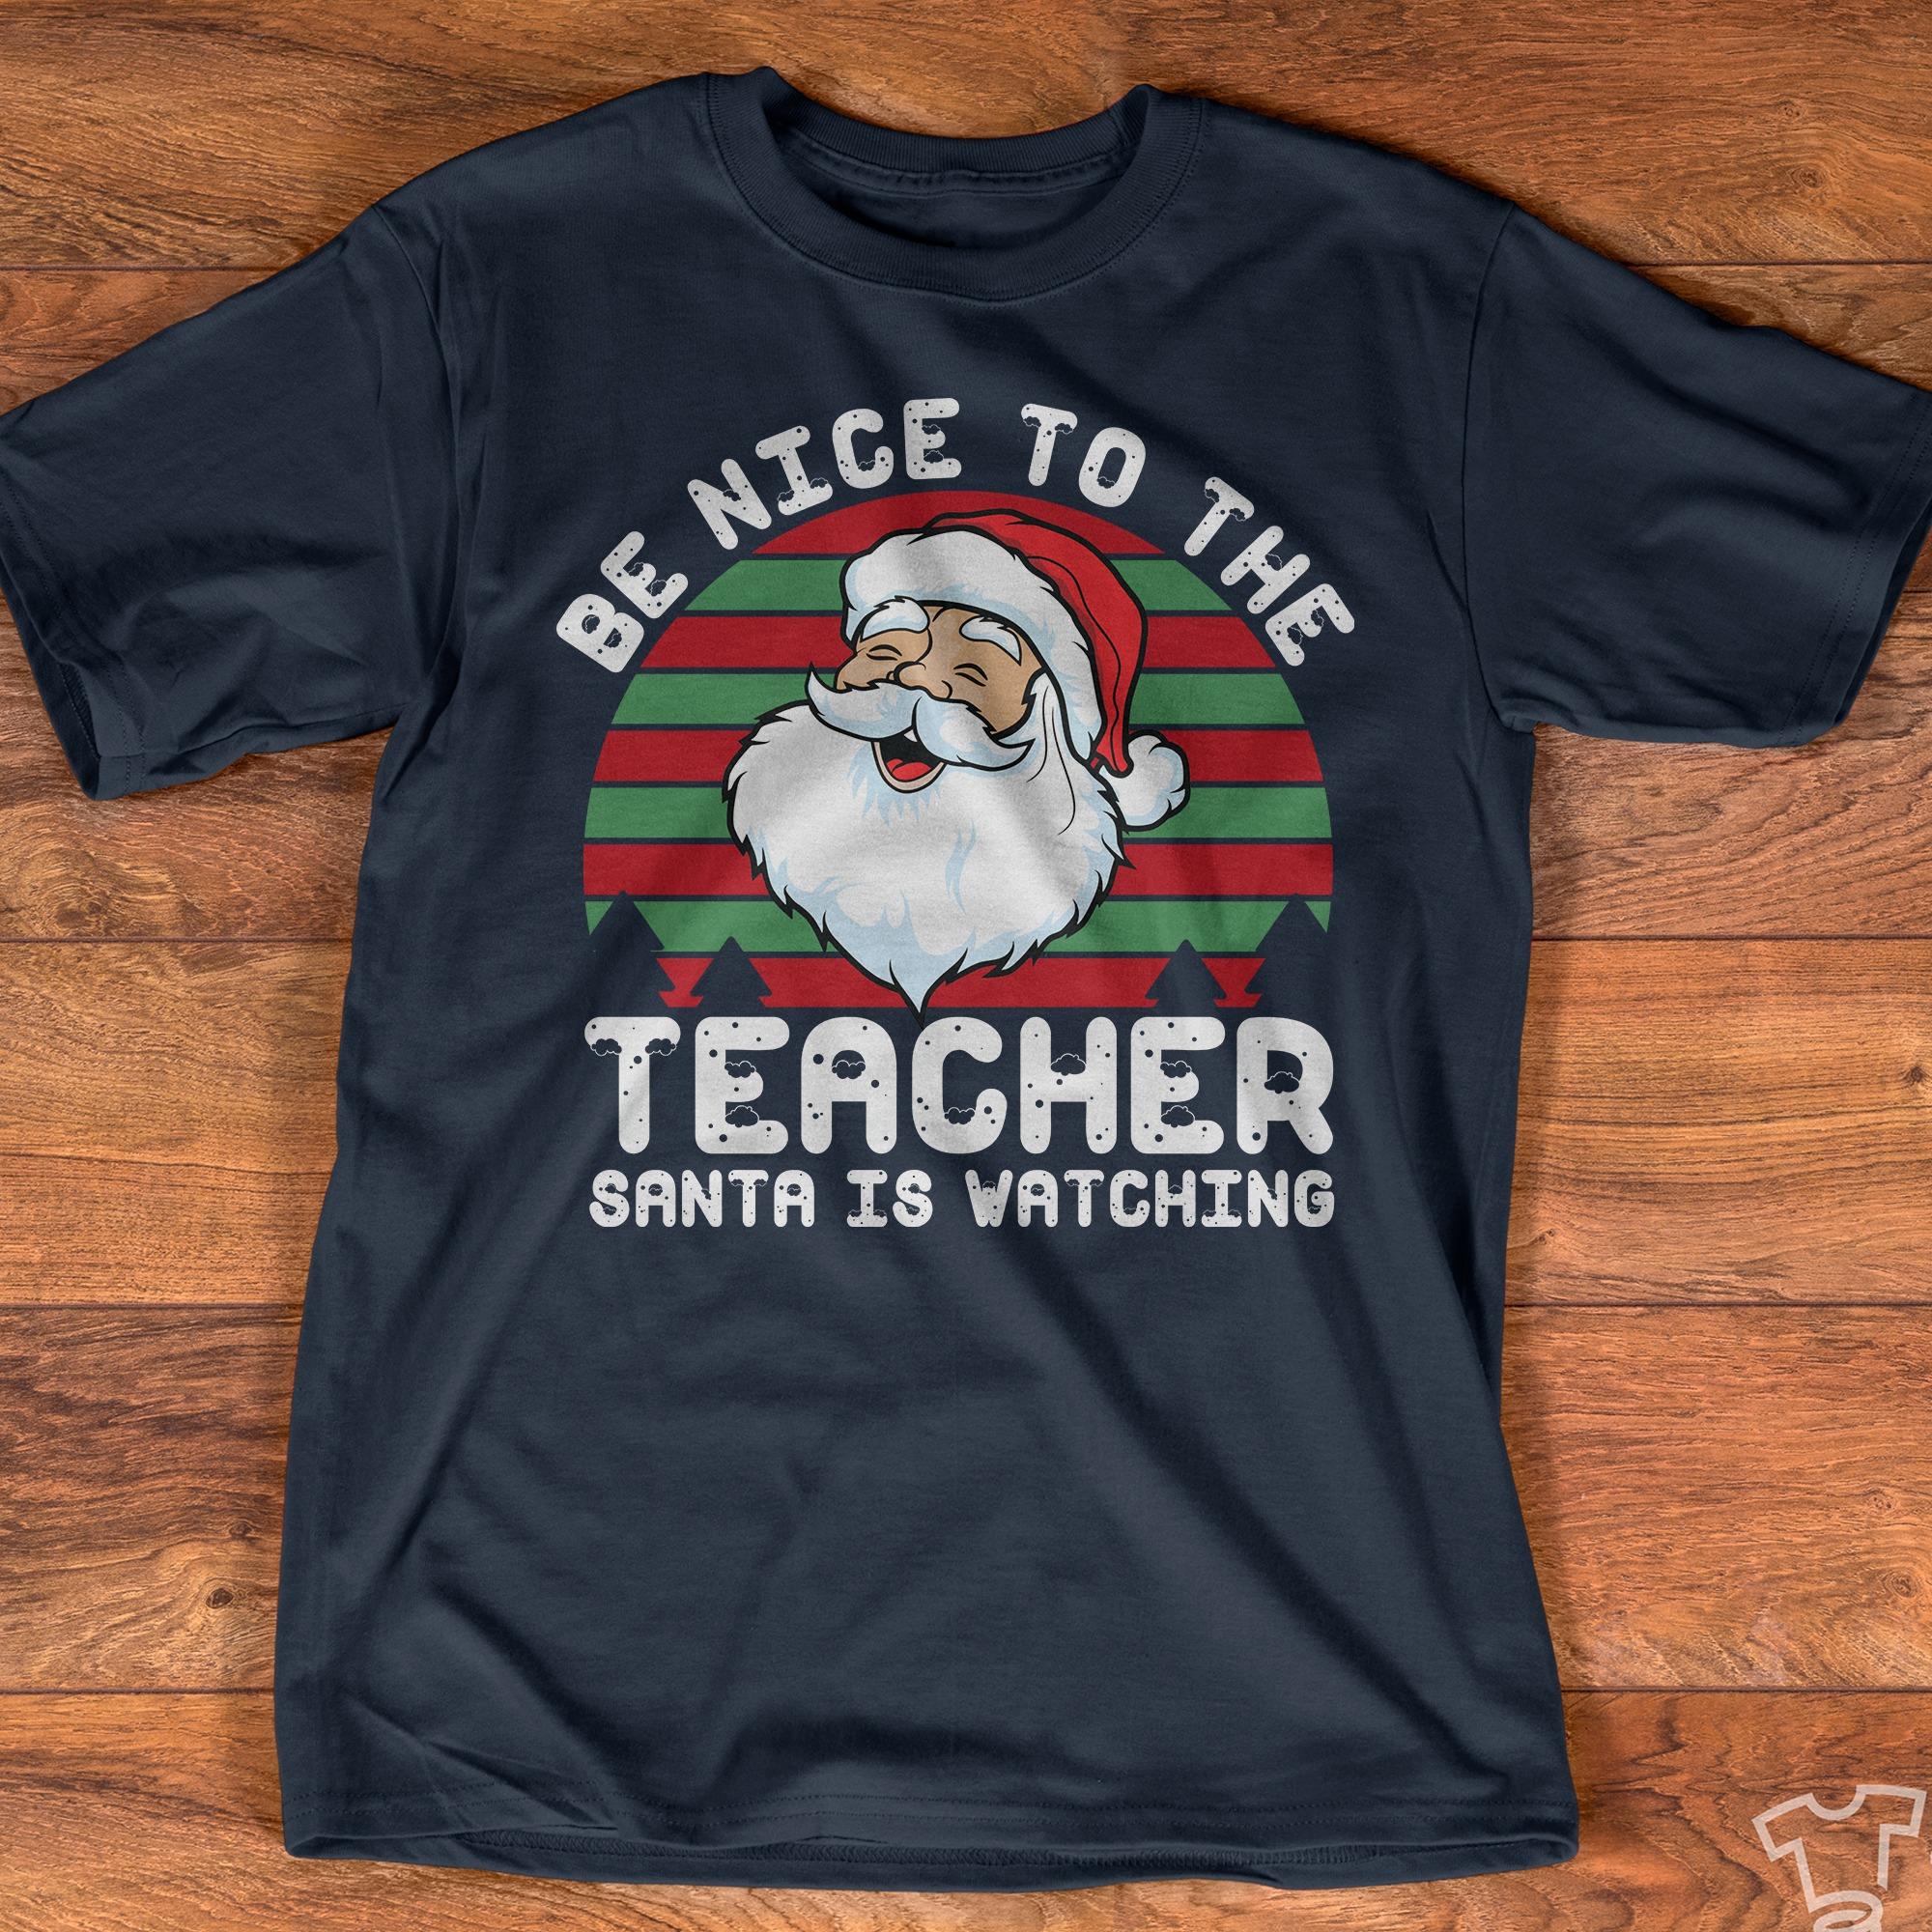 Santa Claus Teacher - Be nice to the teacher santa is watching